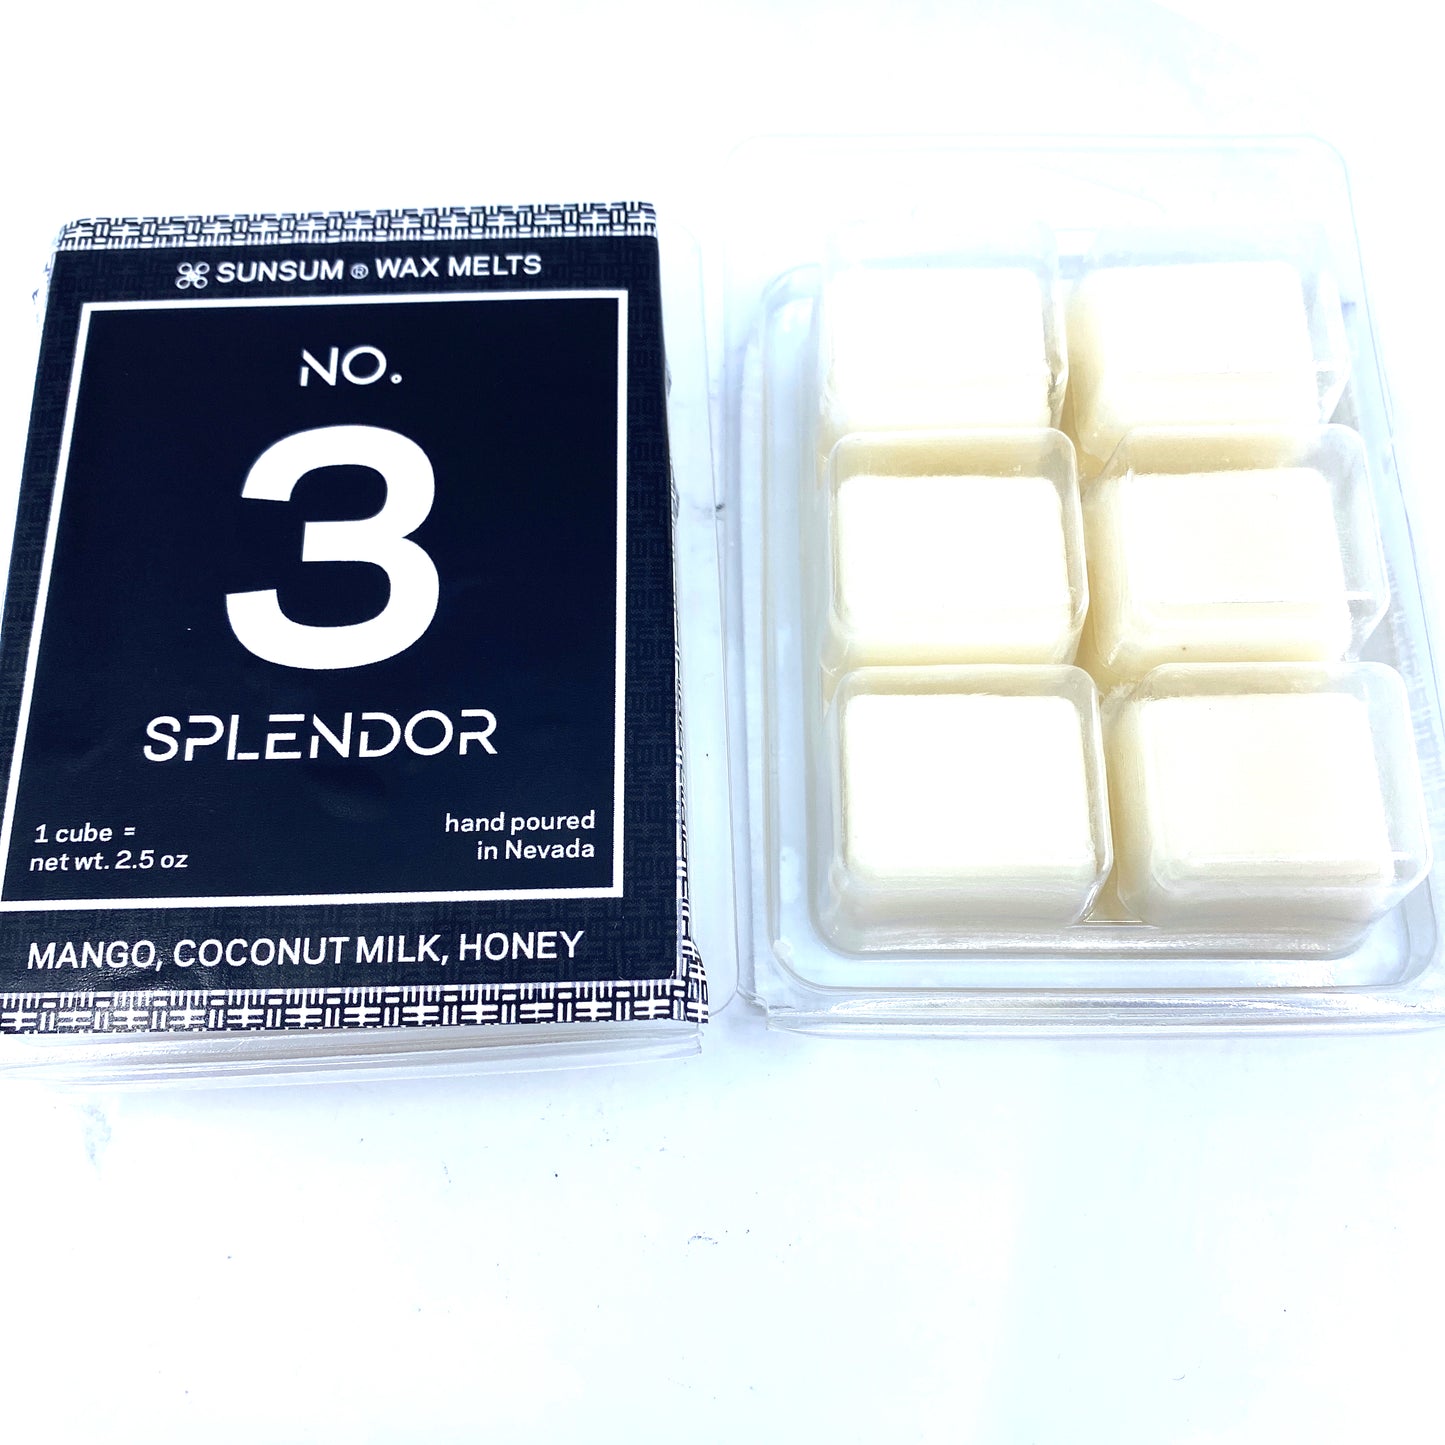 No. 3 - Splendor, Mango, Coconut Milk, Honey (wax melts)